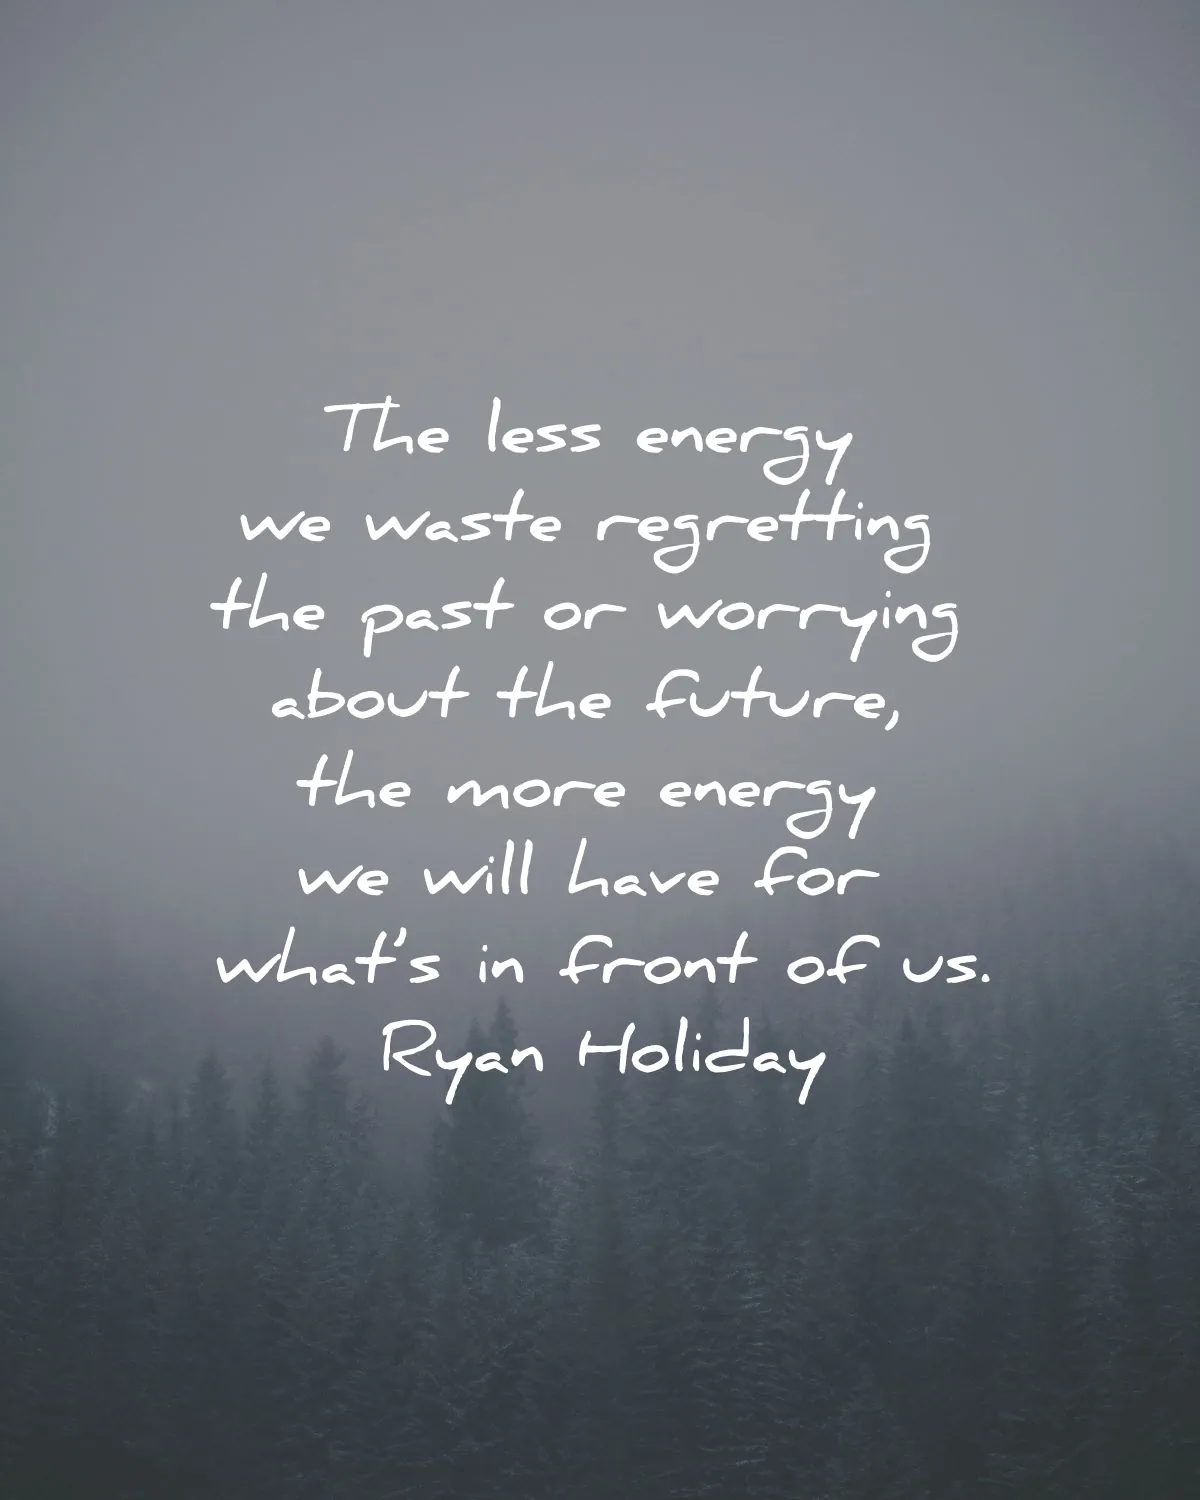 stillness is the key quotes summary ryan holiday less energy regretting future wisdom